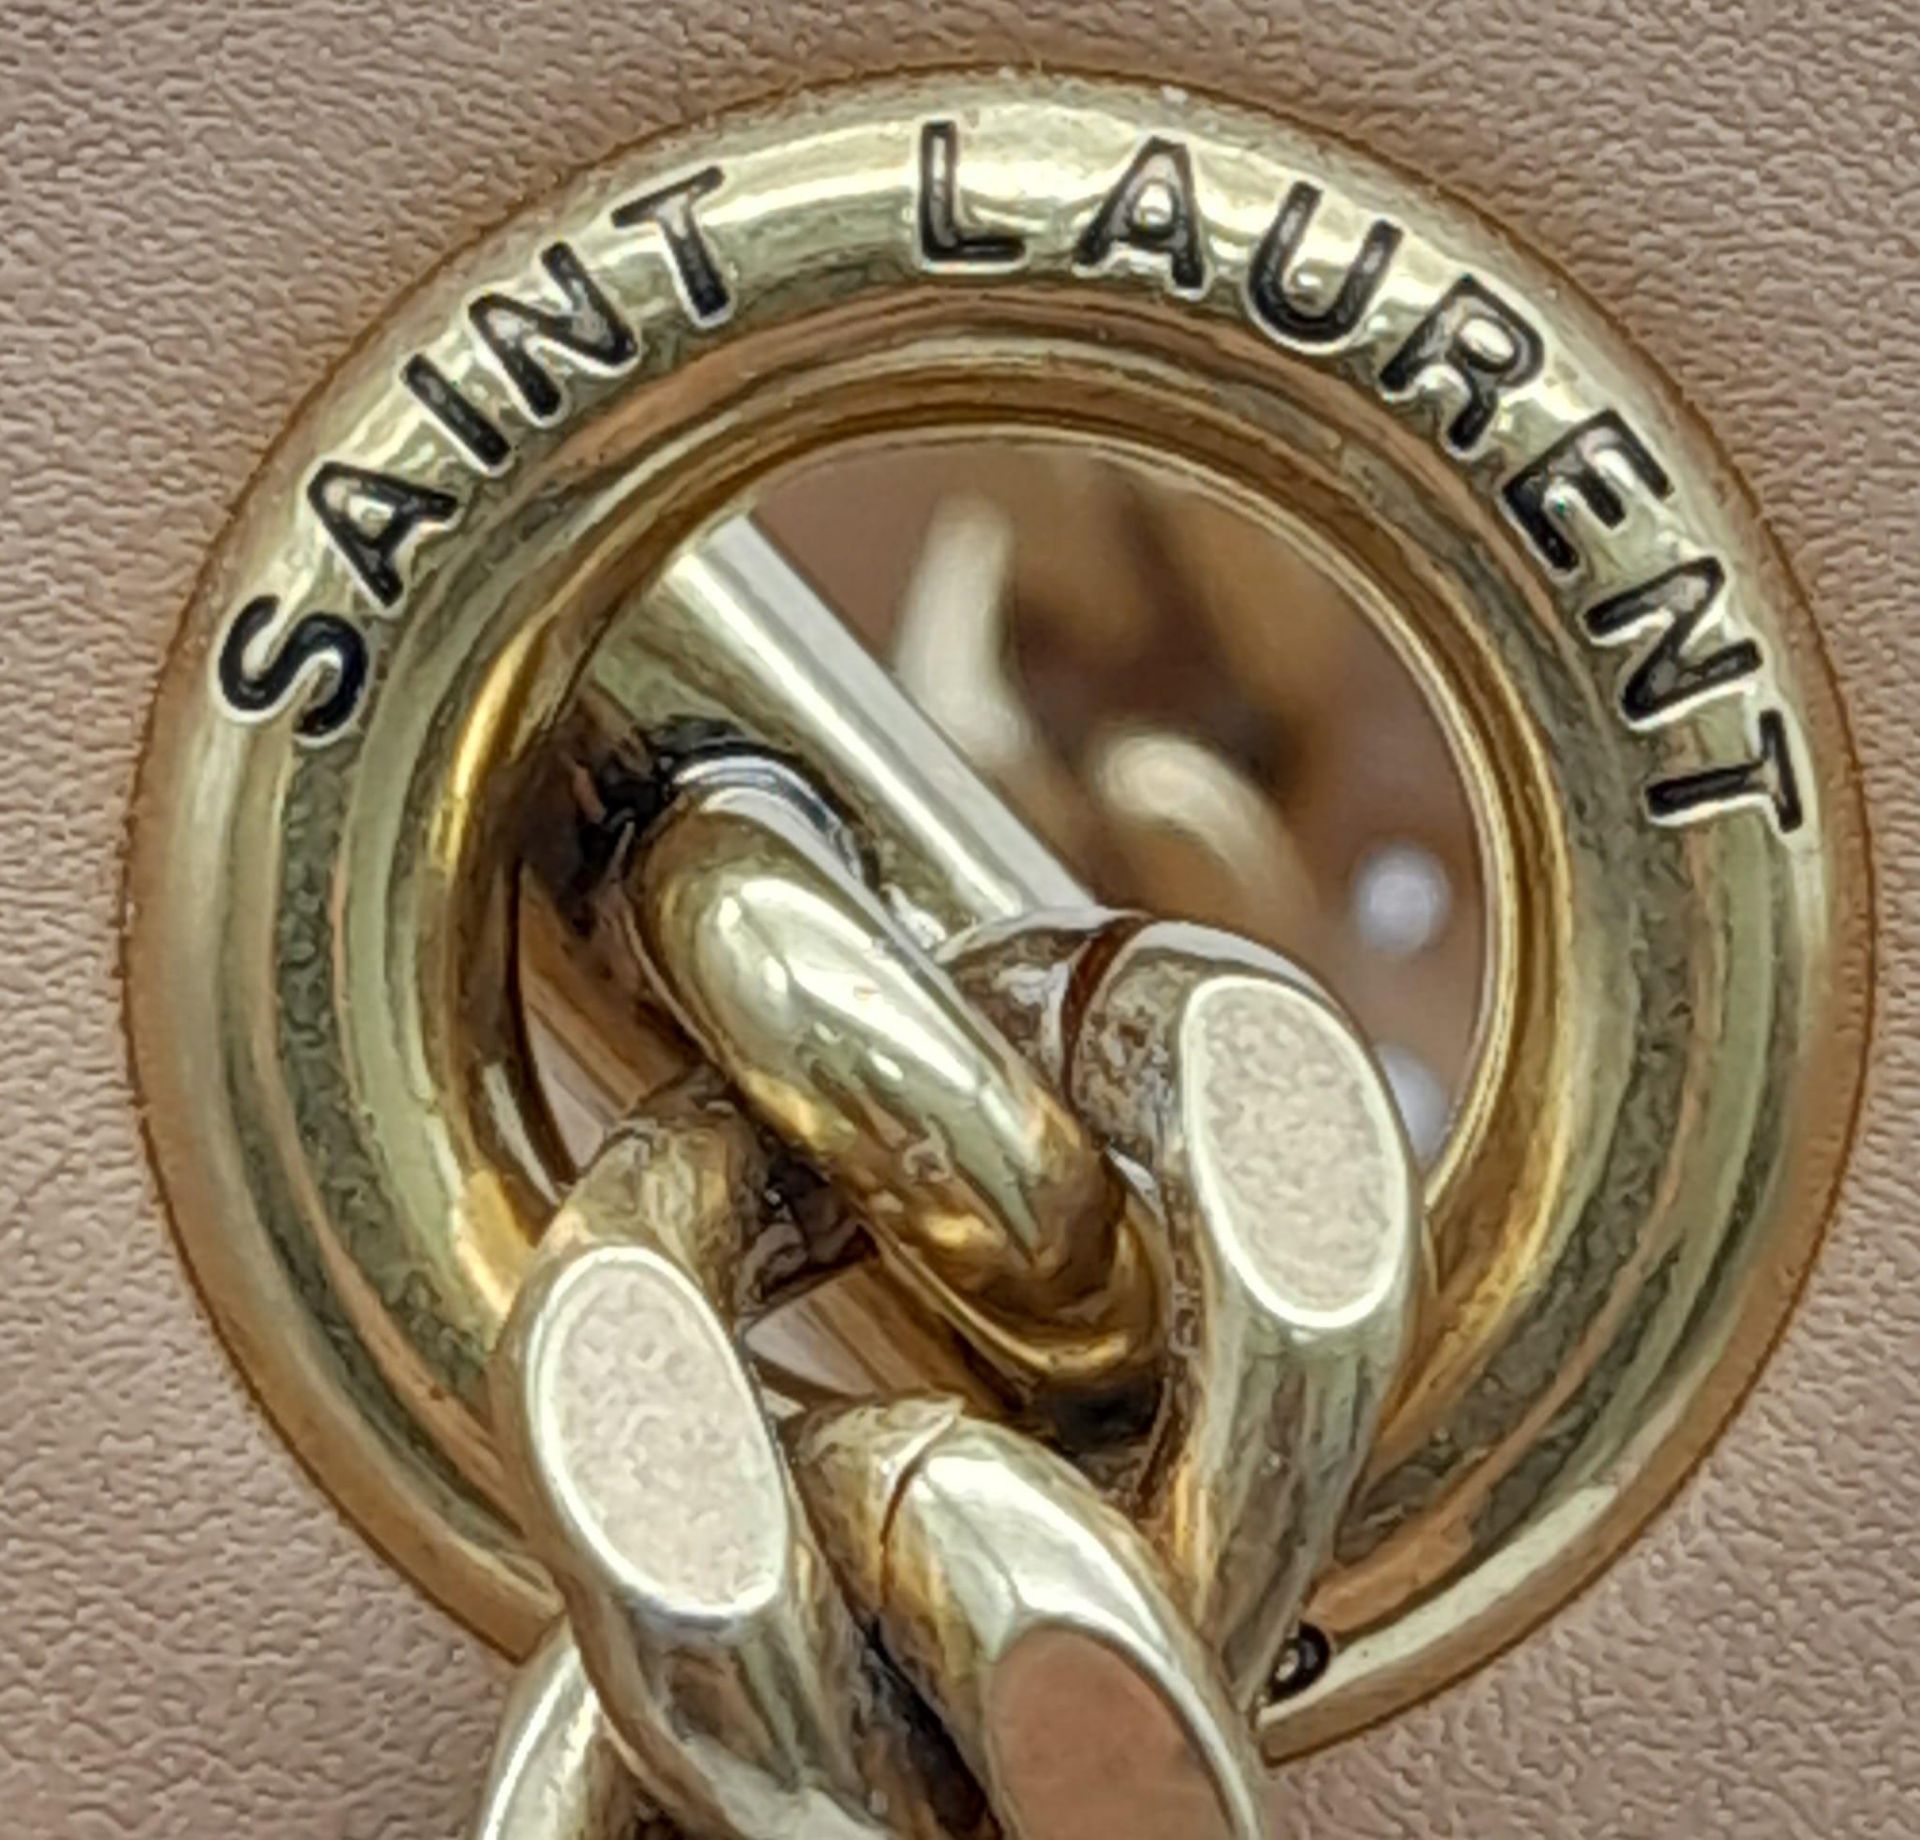 A Saint Laurent Beige Tote Bag. Woven rattan and leather trim exterior. Magnetic closure, gold-toned - Bild 10 aus 12